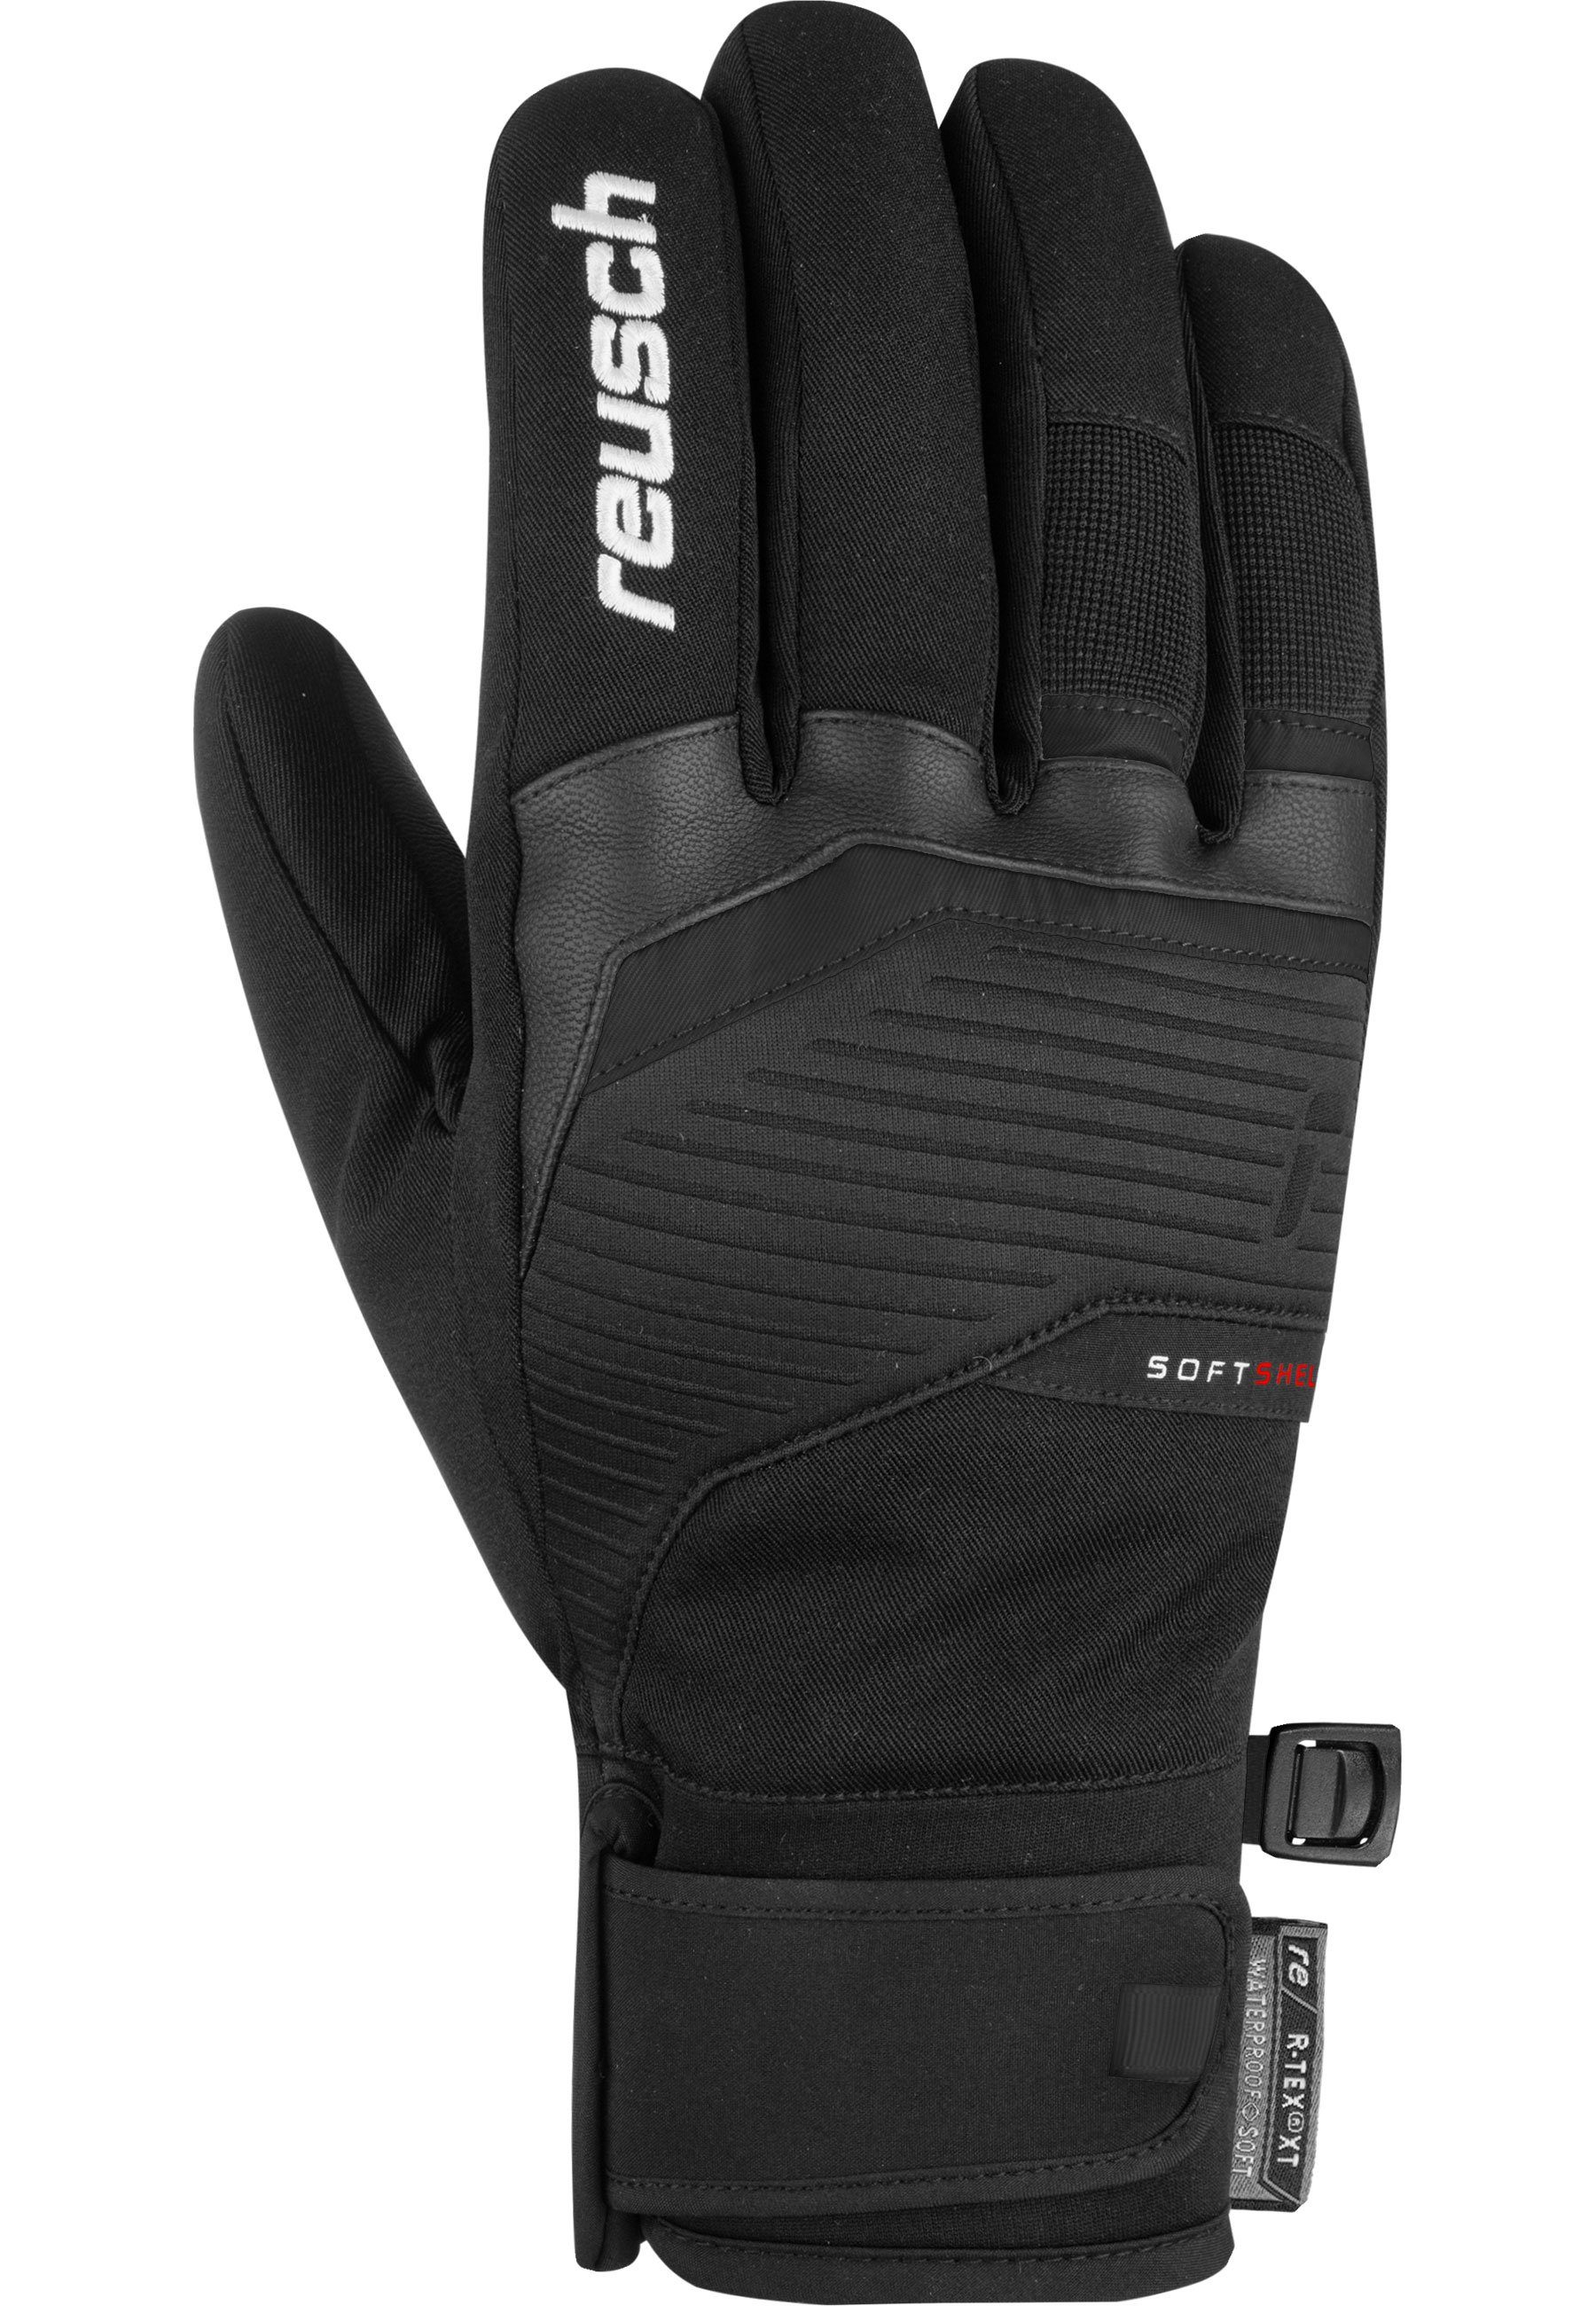 Reusch Skihandschuhe Venom R-TEX® XT aus schwarz-schwarz und Material atmungsaktivem wasserdichtem